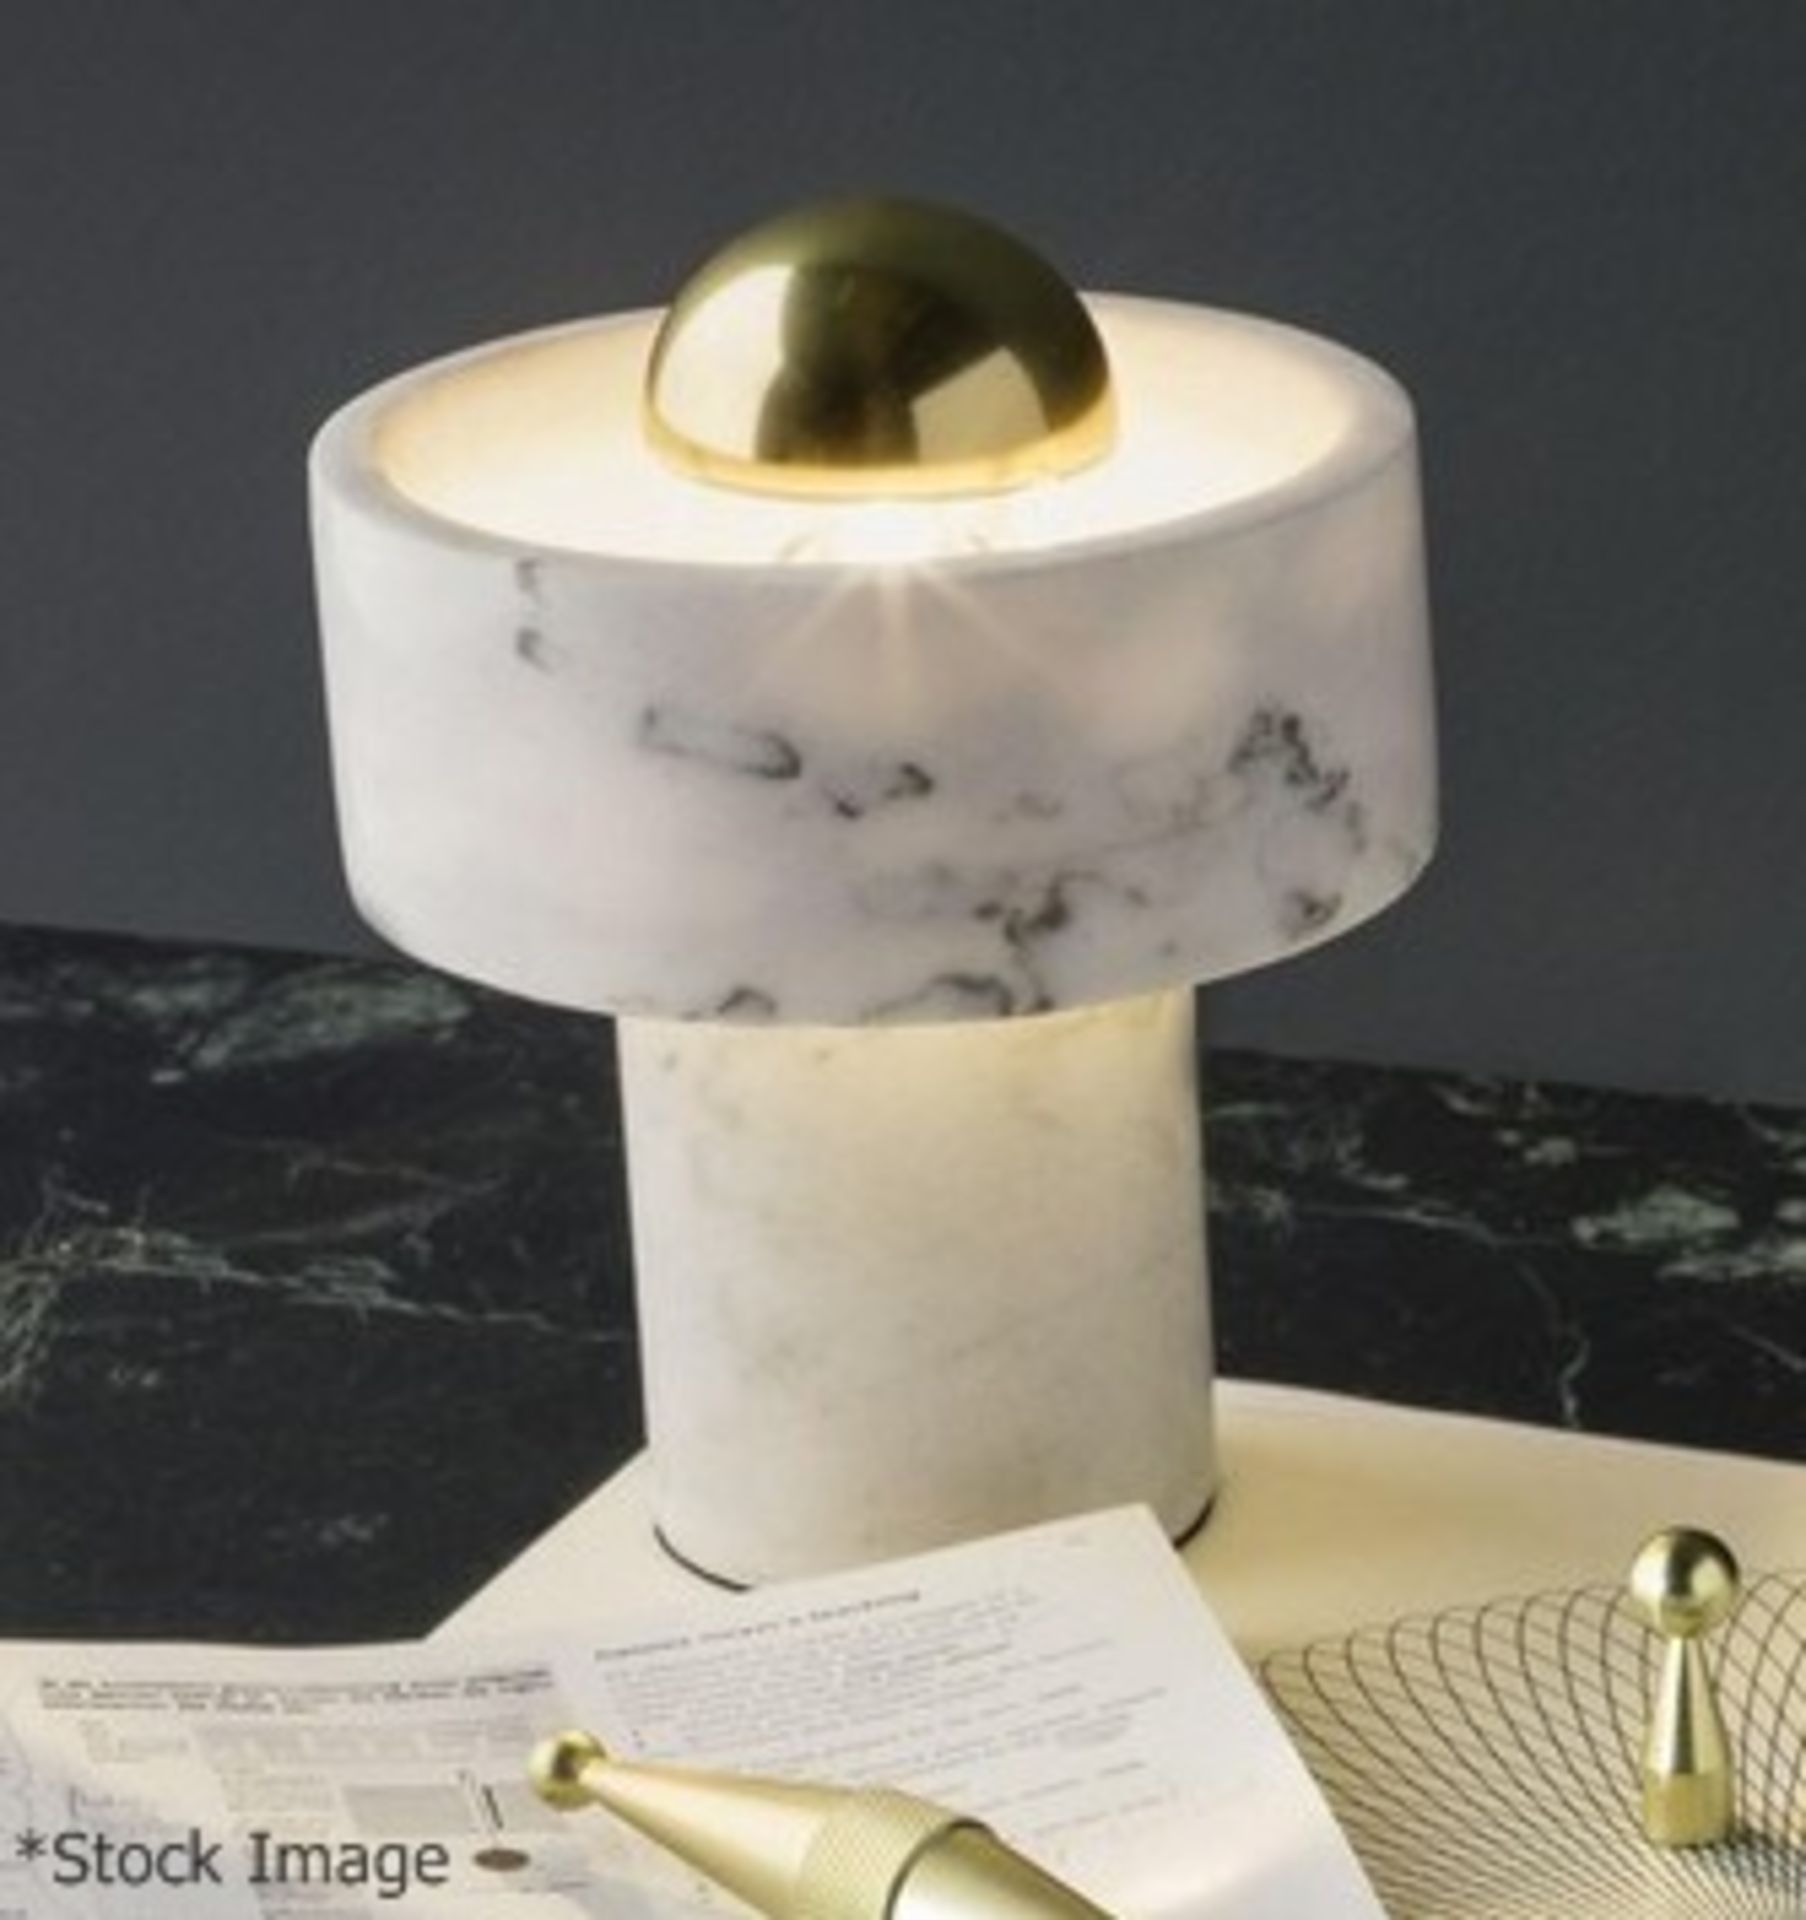 1 x Tom Dixon Designer Stone Table Lamp In Marble - Dimensions: ø14x17.6cm - Original RRP £230.00